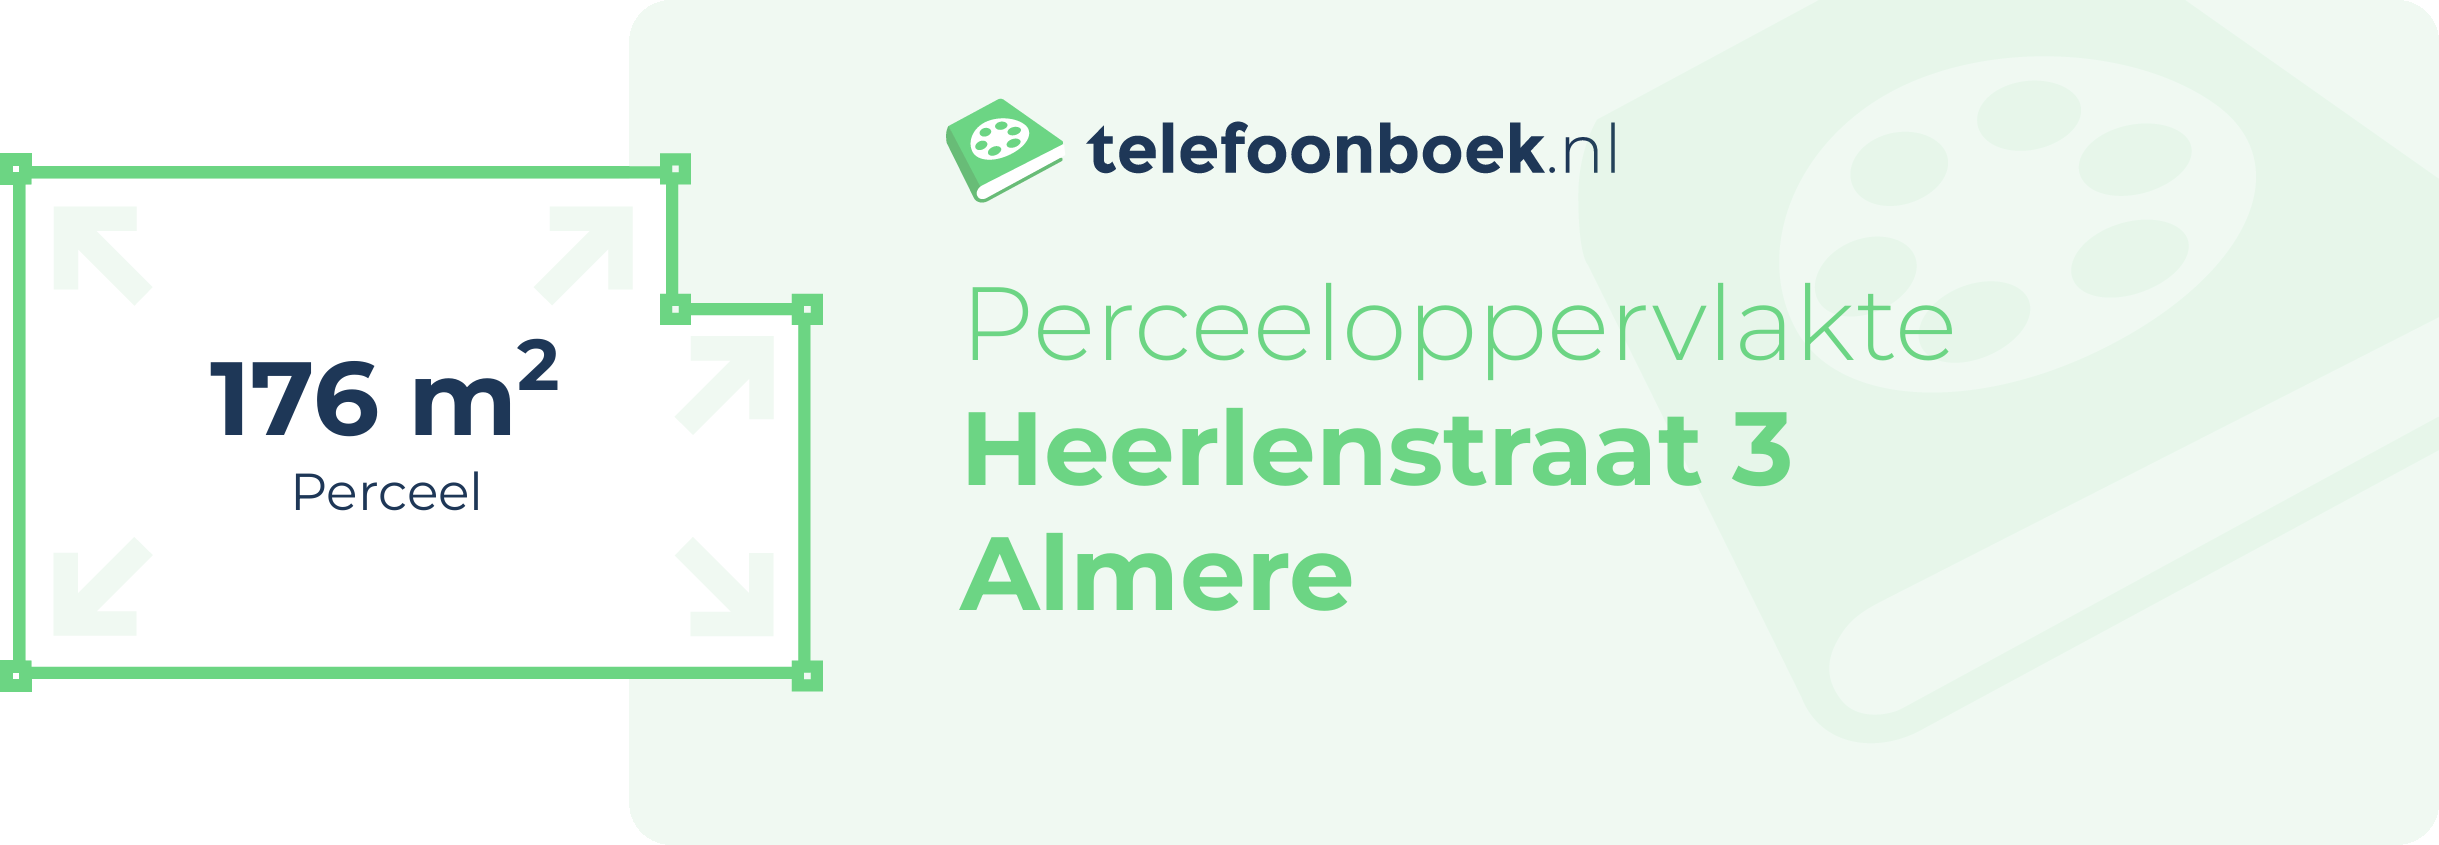 Perceeloppervlakte Heerlenstraat 3 Almere